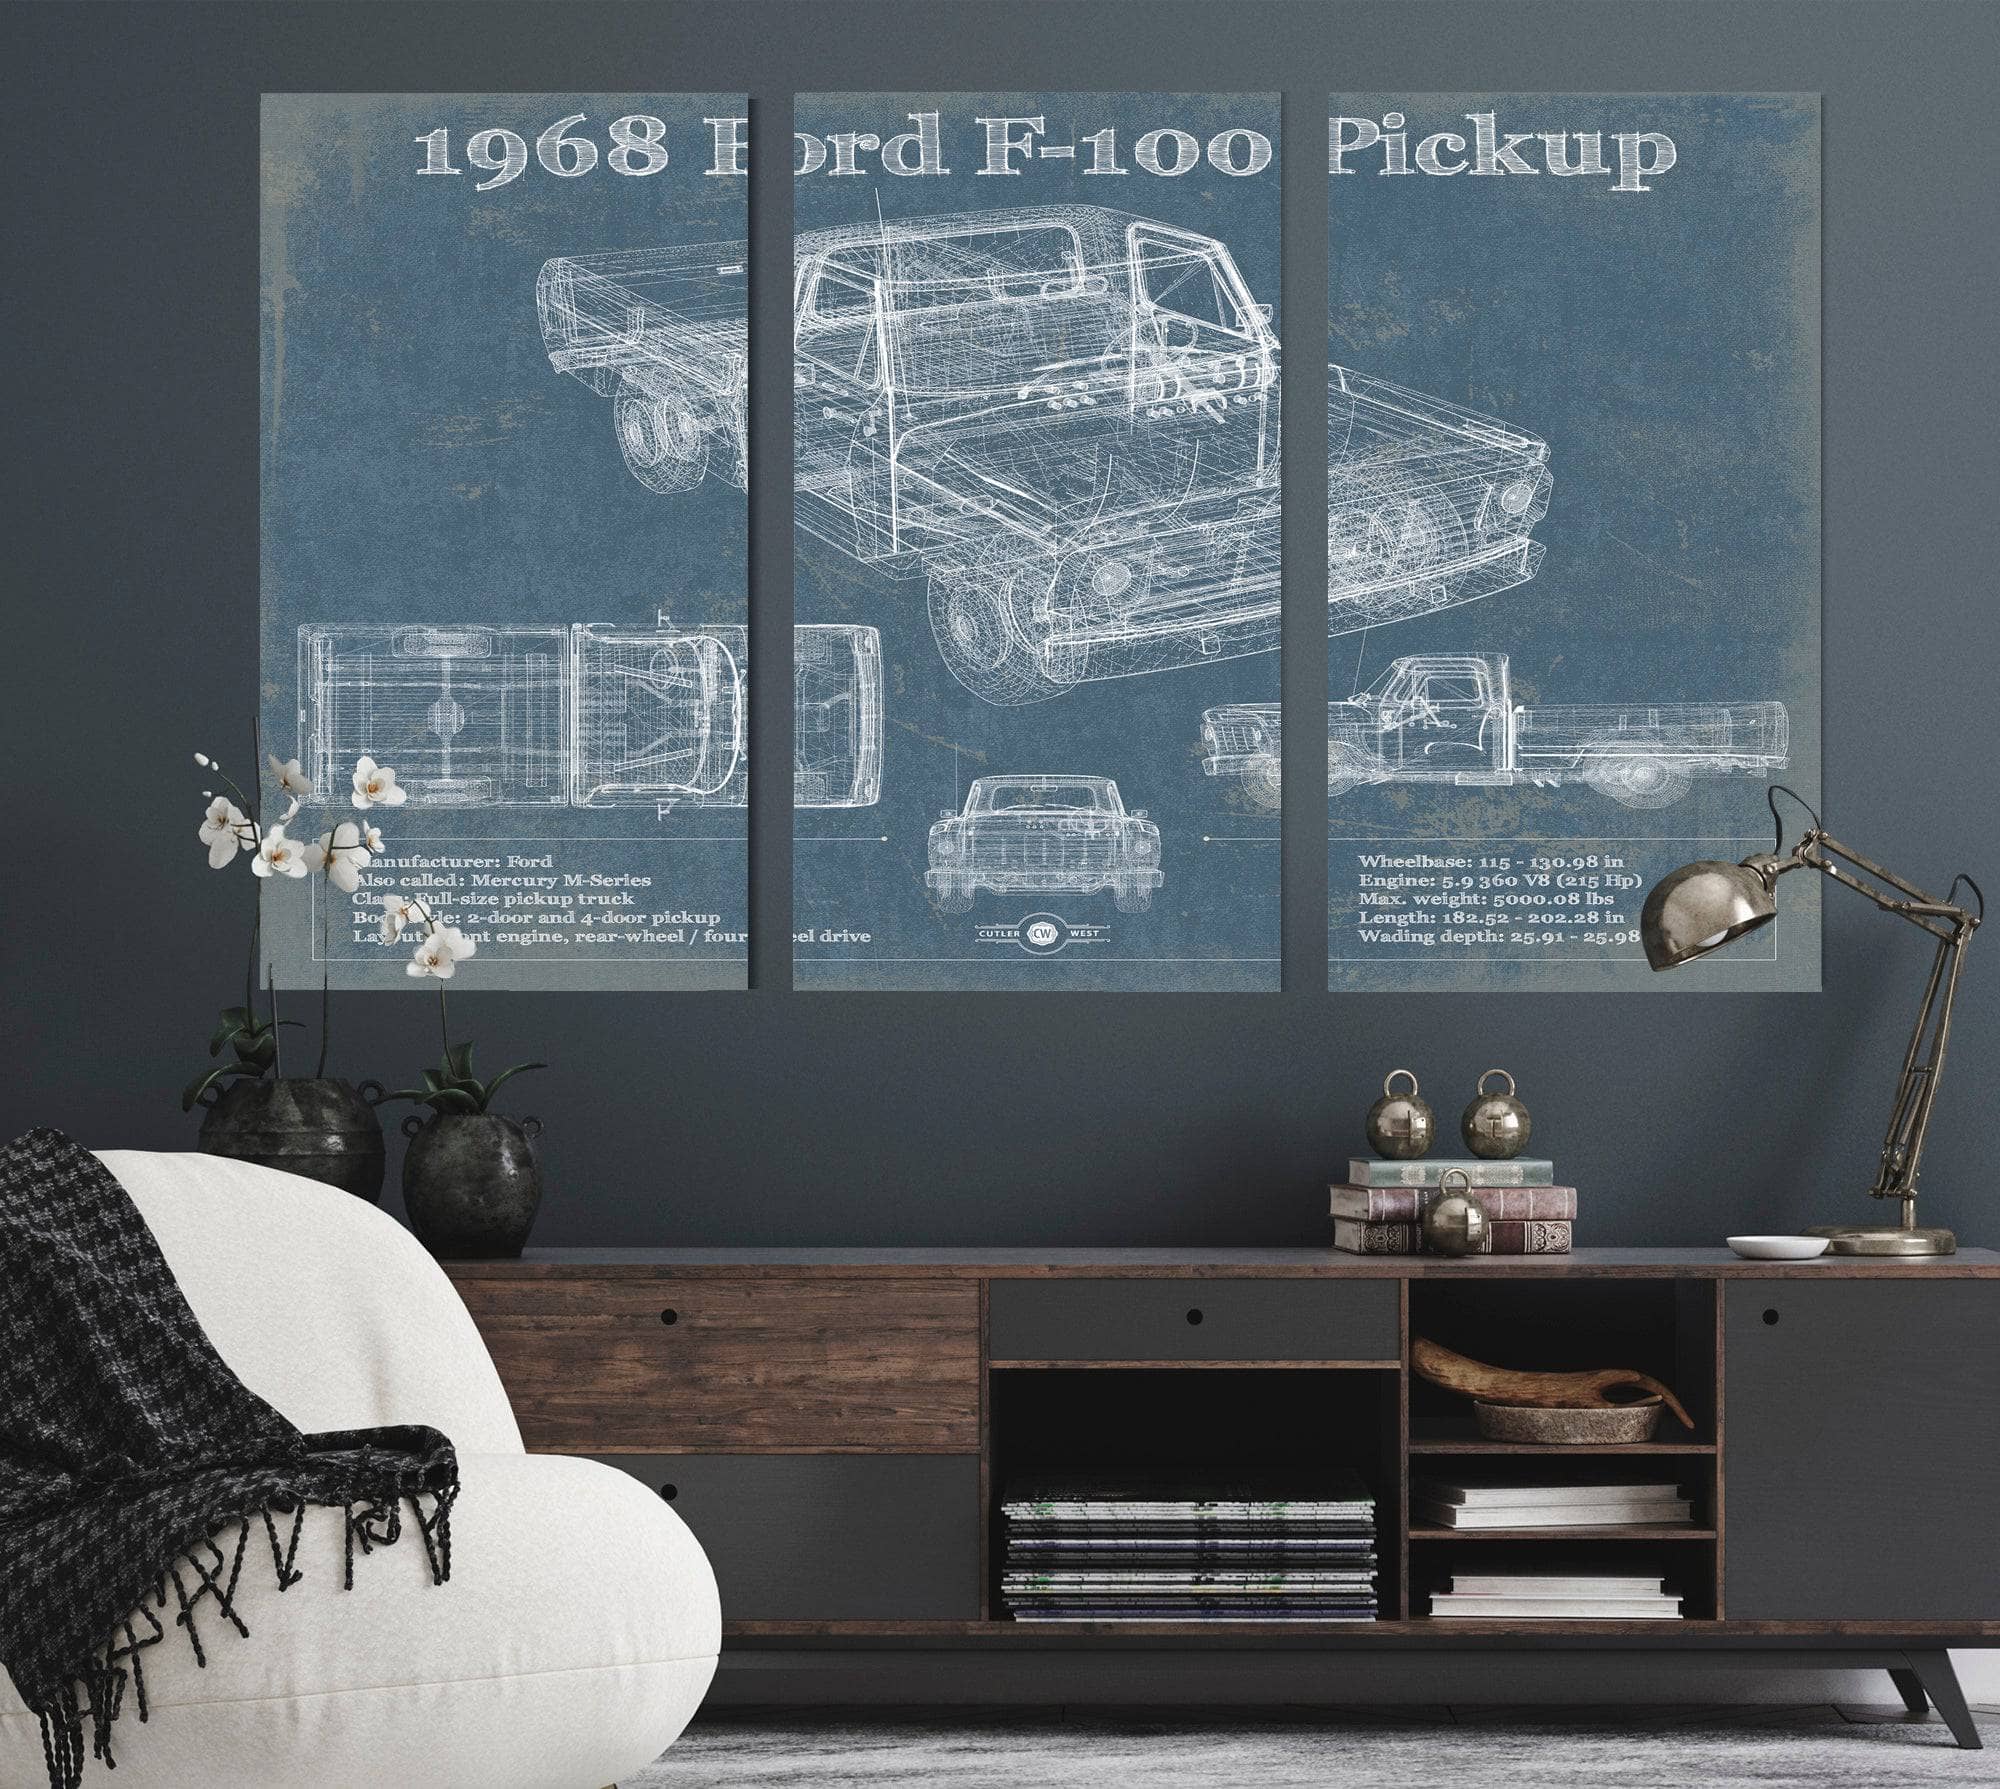 1968 Ford F-100 Pickup Vintage Blueprint Auto Print